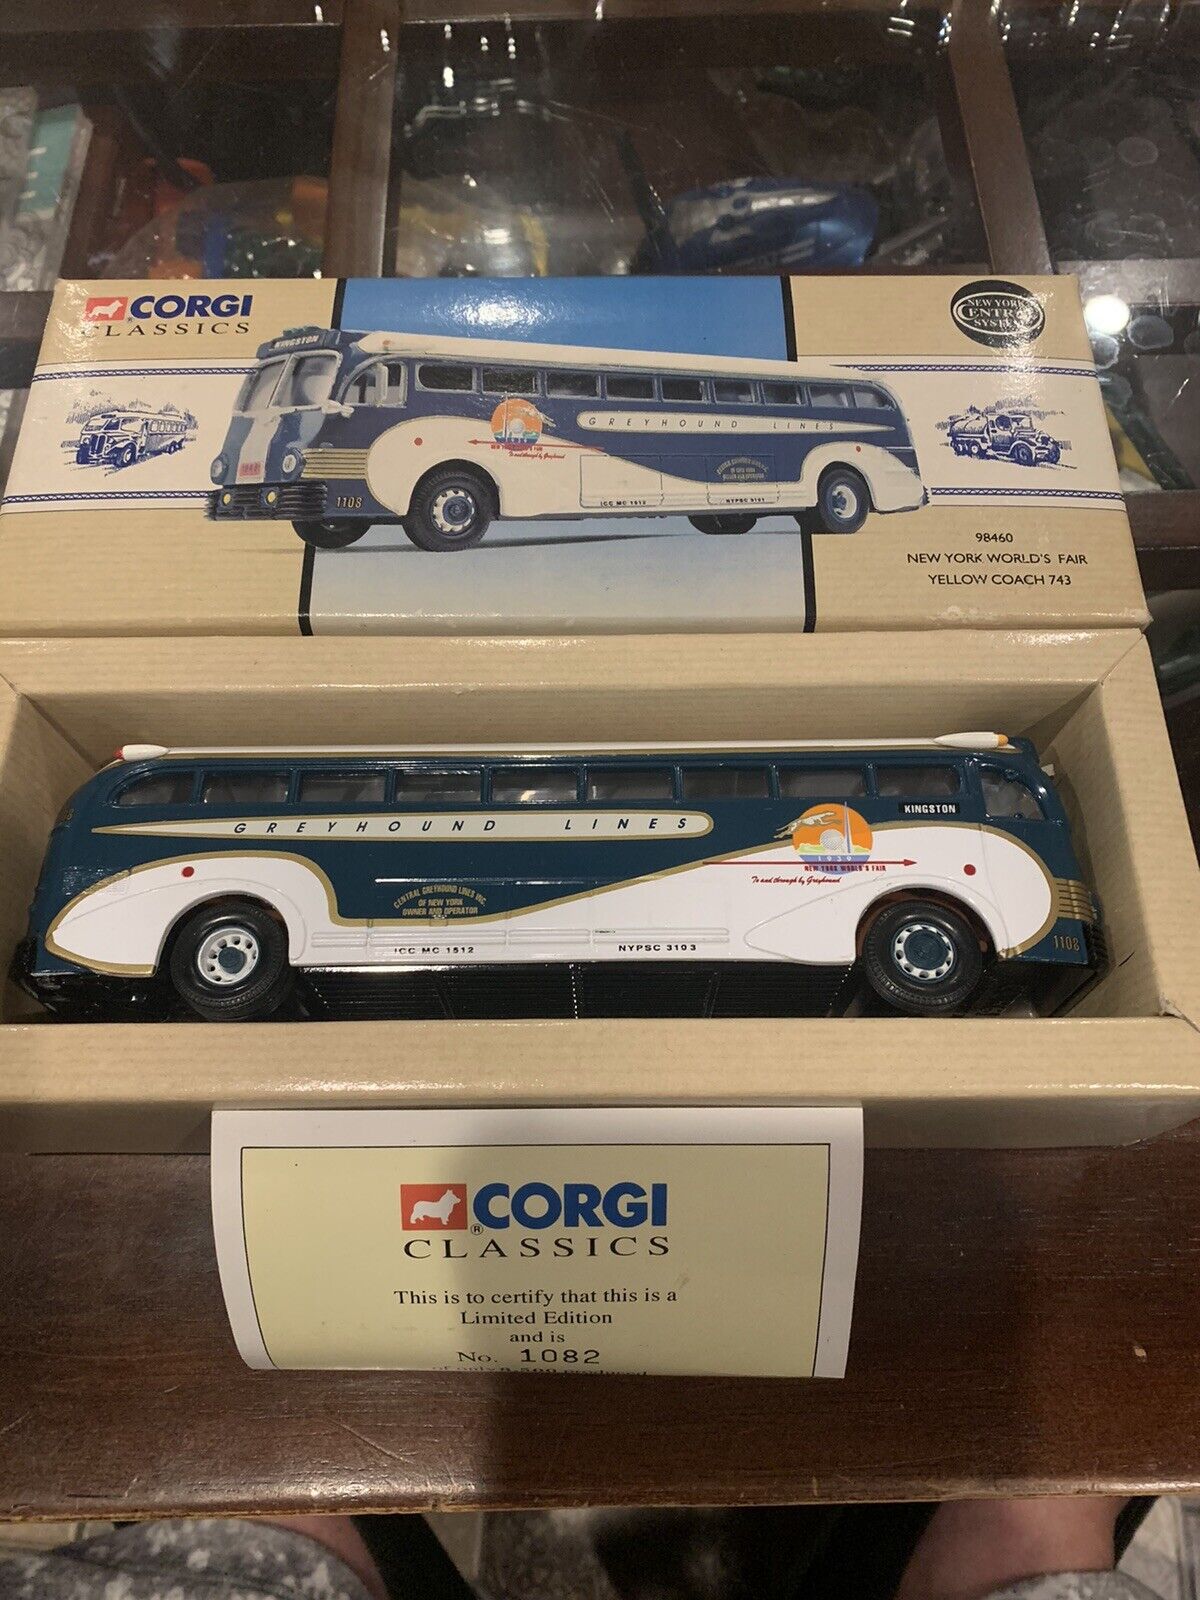 VTG. Corgi Classics #1082 greyhound line yellow coach 743